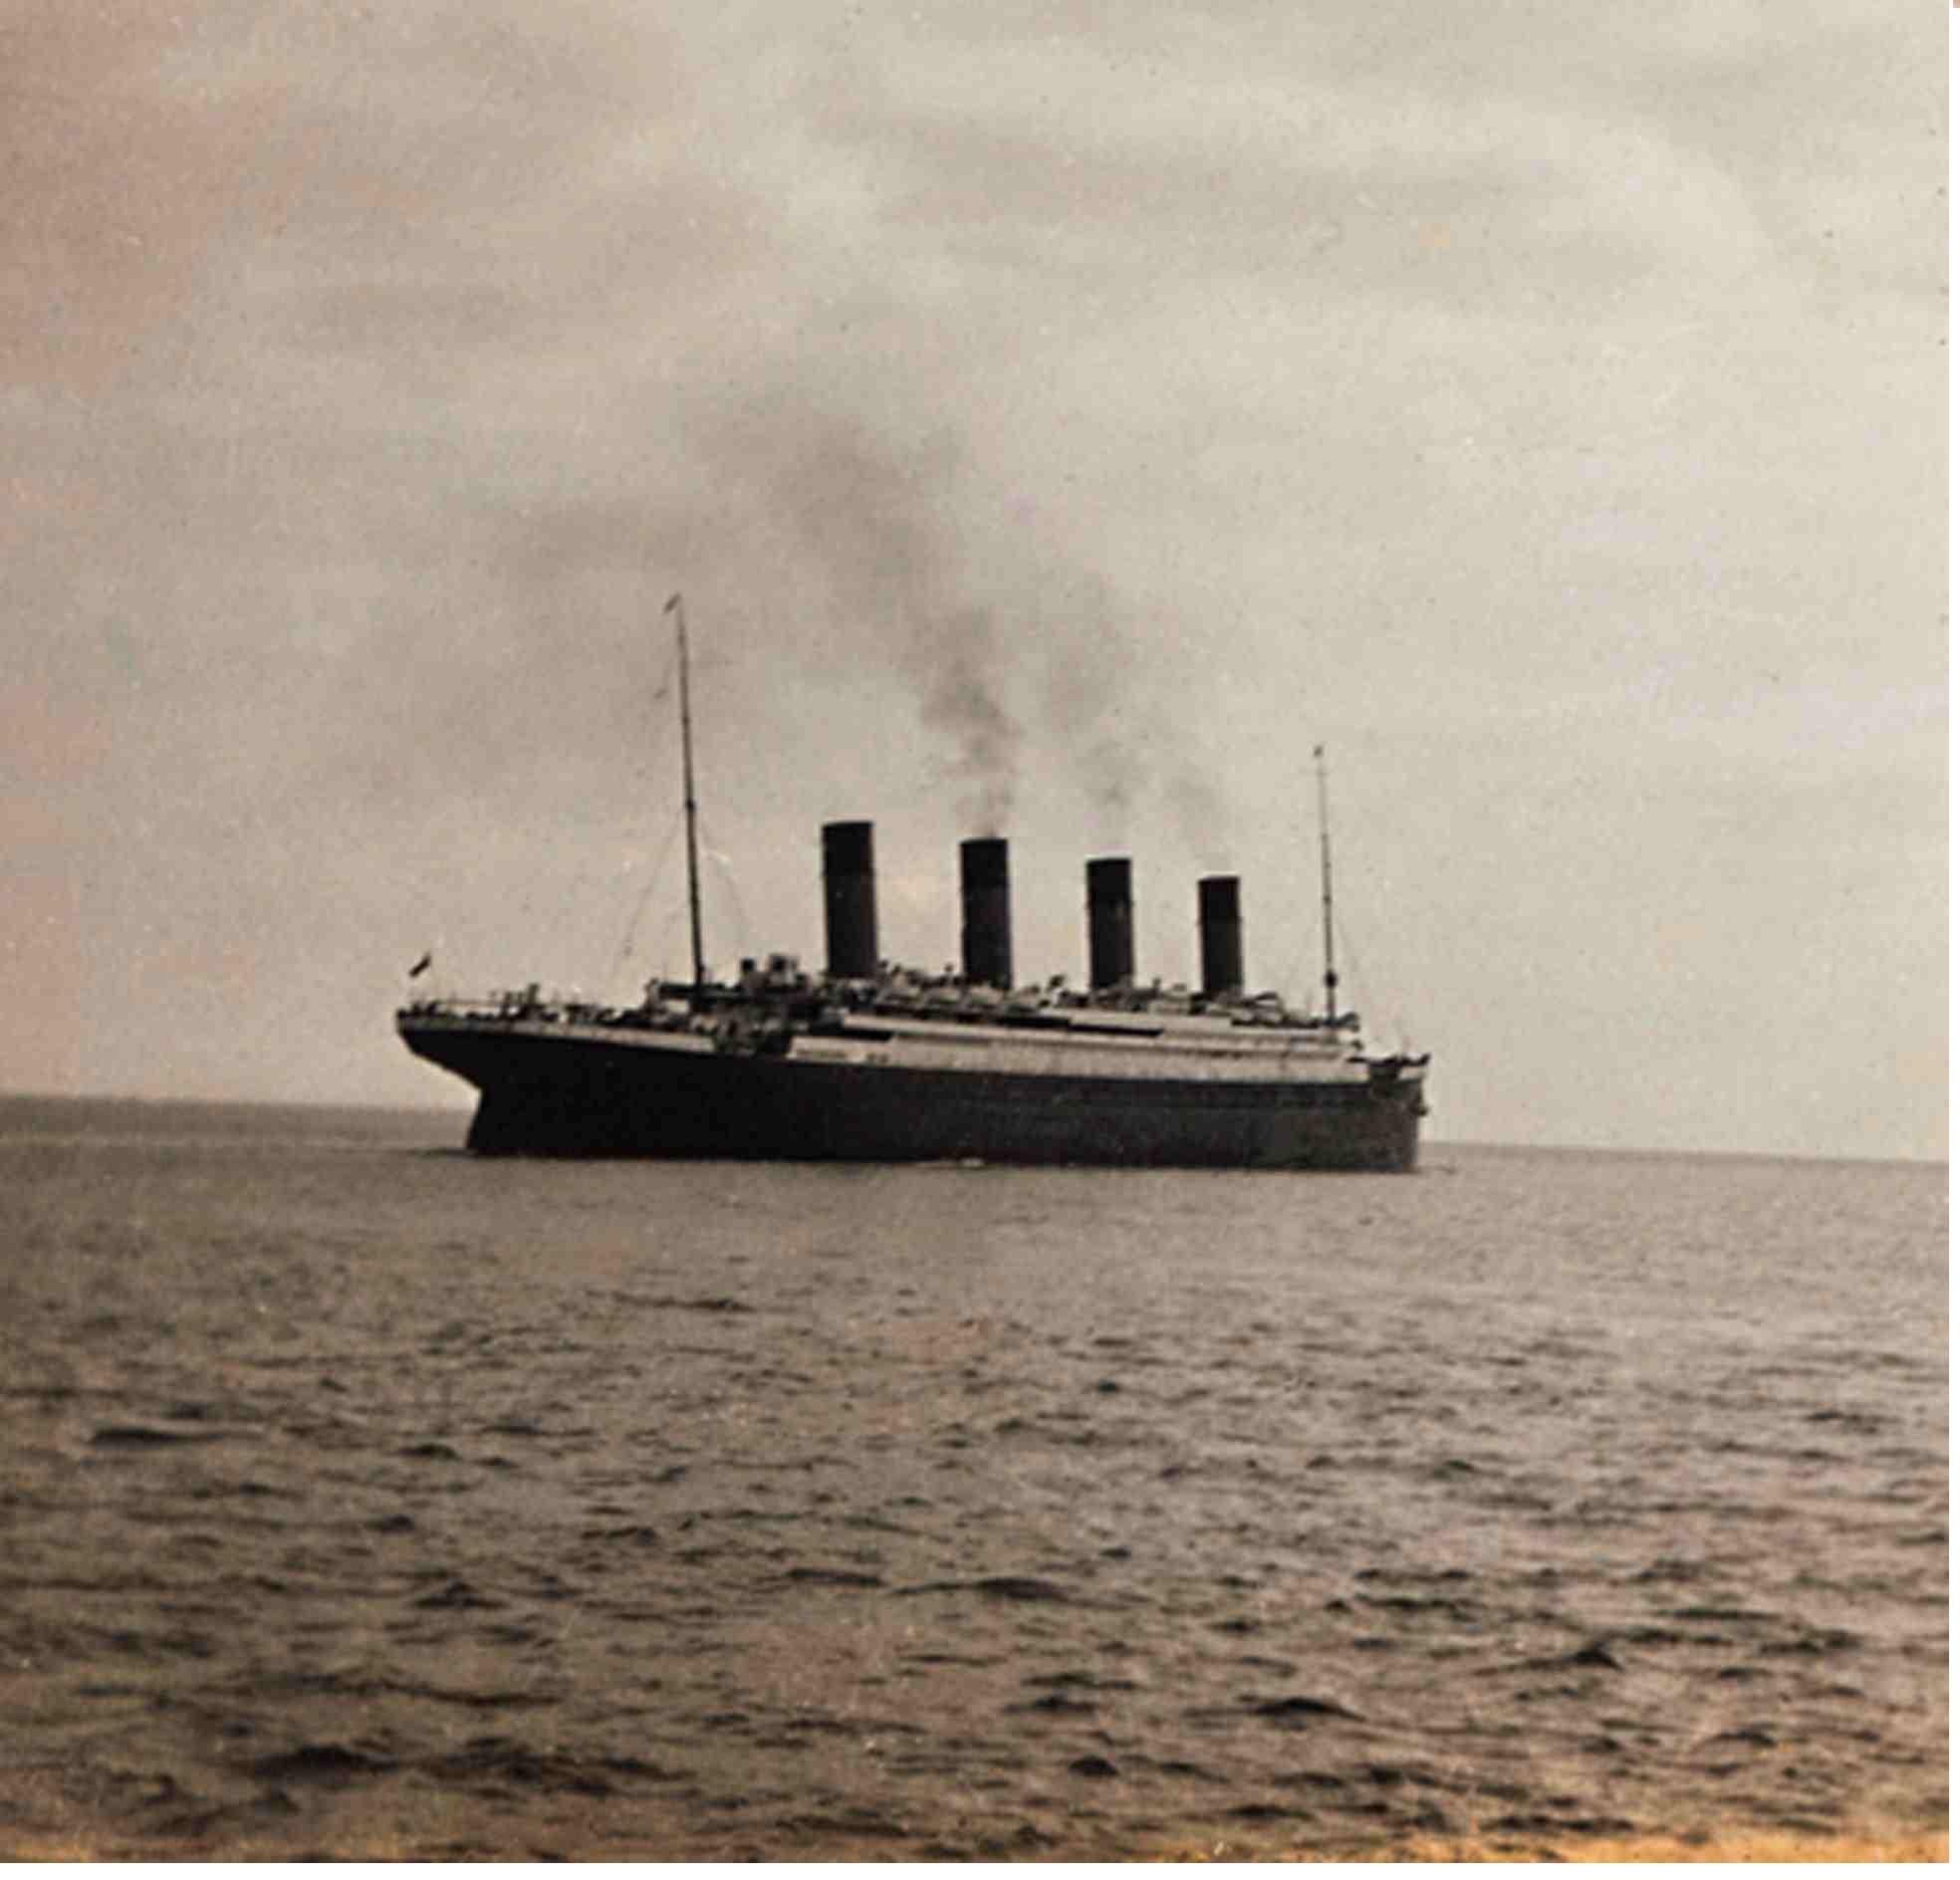 Rms Titanic Wallpaper